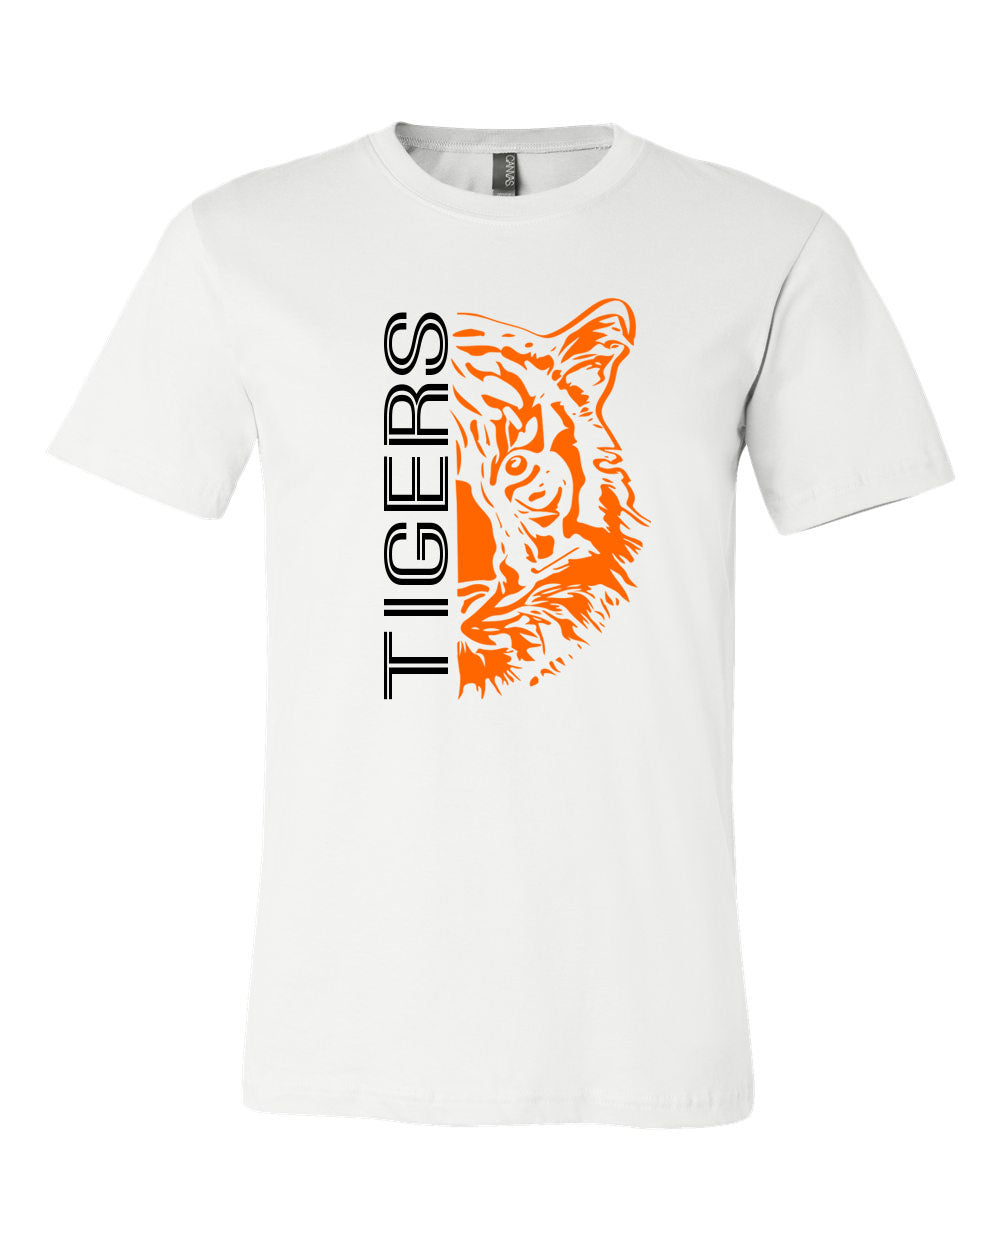 Tigers Design 6 T-Shirt